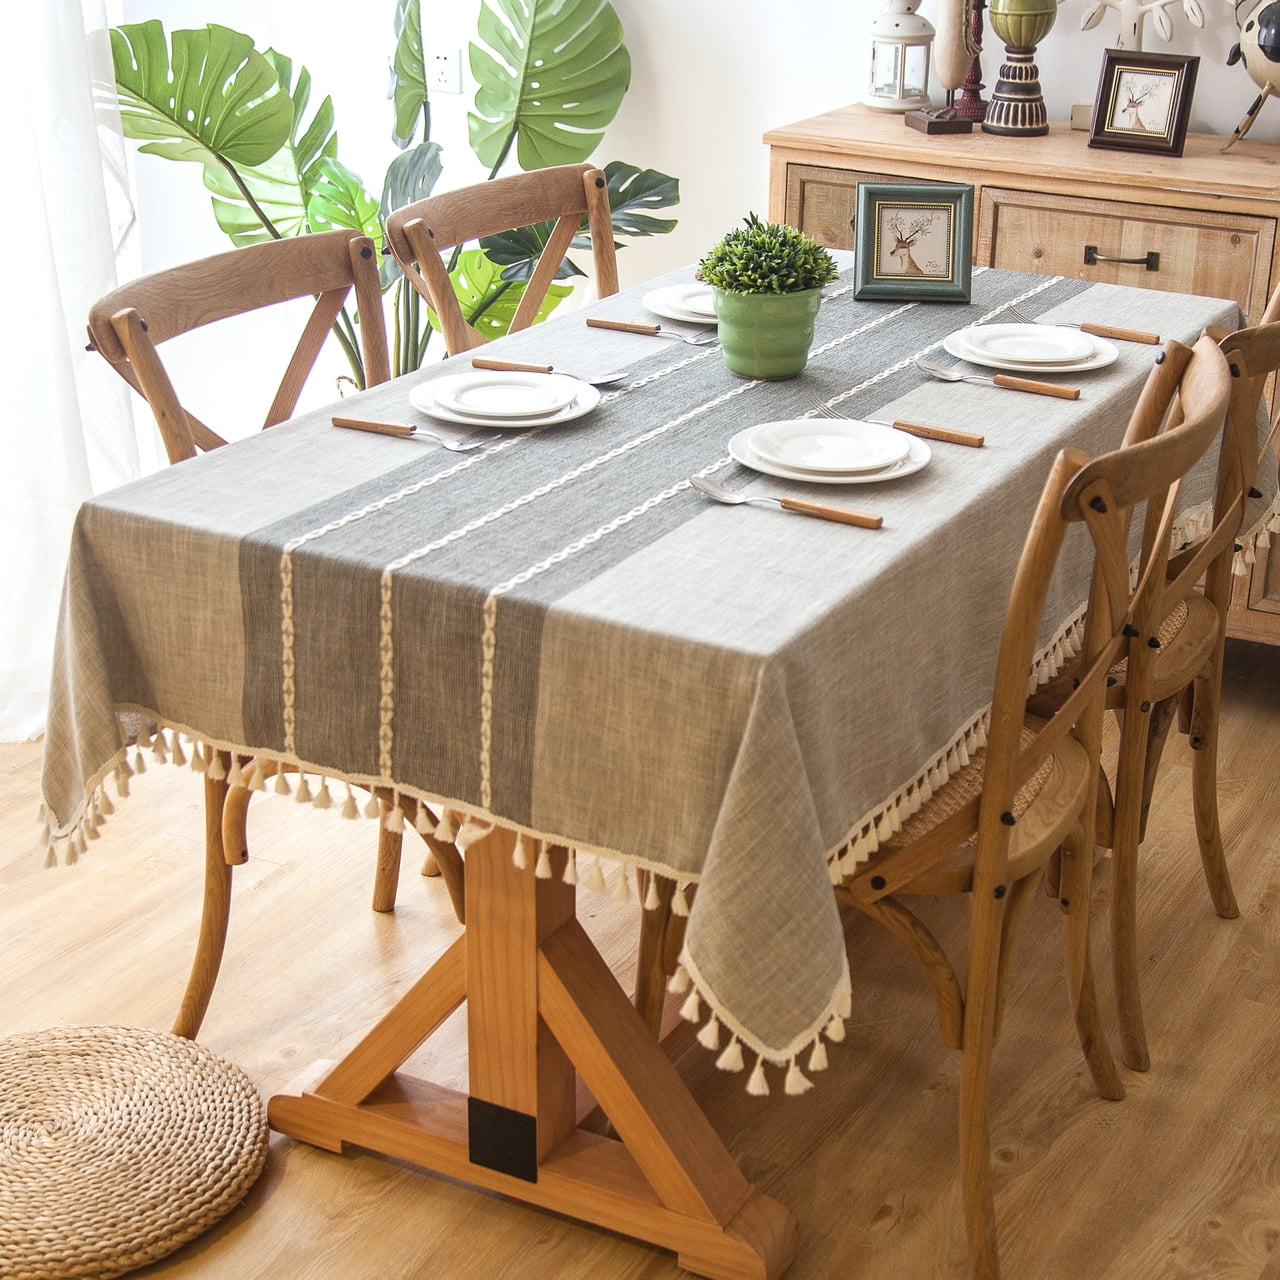 Stylish Table Cloth Cotton Linen Rectangle Tablecloth Washable Desk Cover Proper 